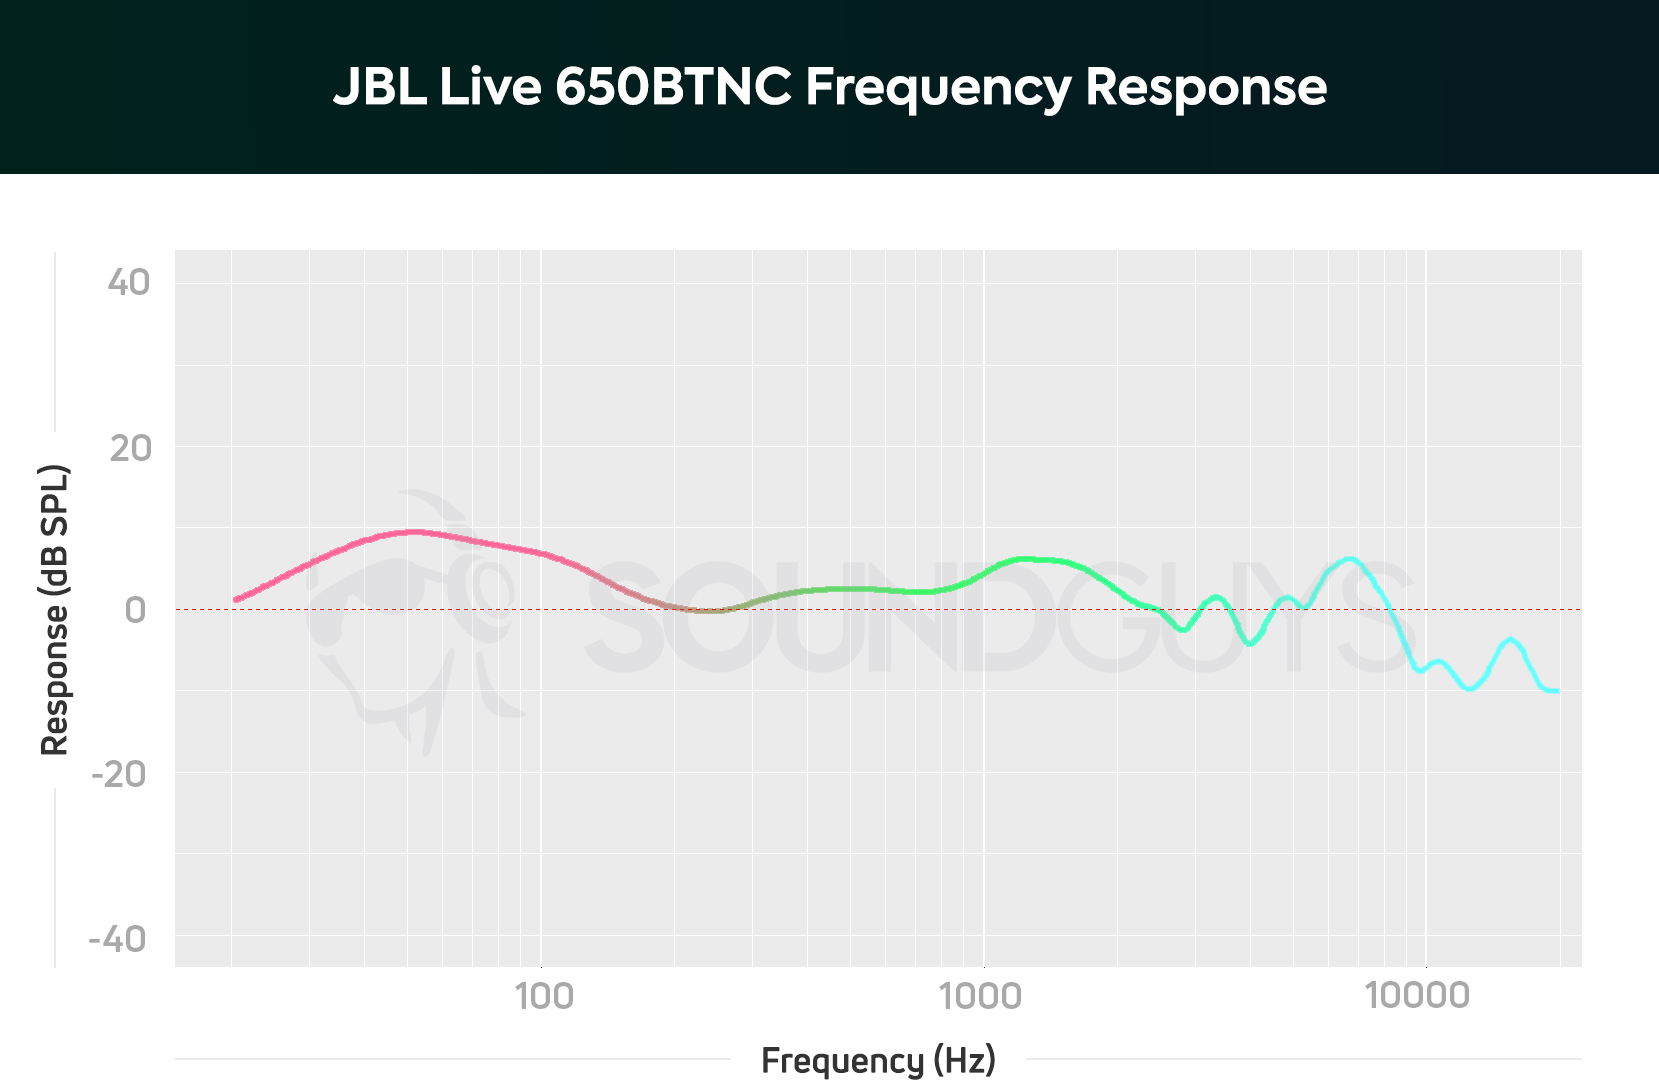 JBL Live 650BTNC frequency response chart.